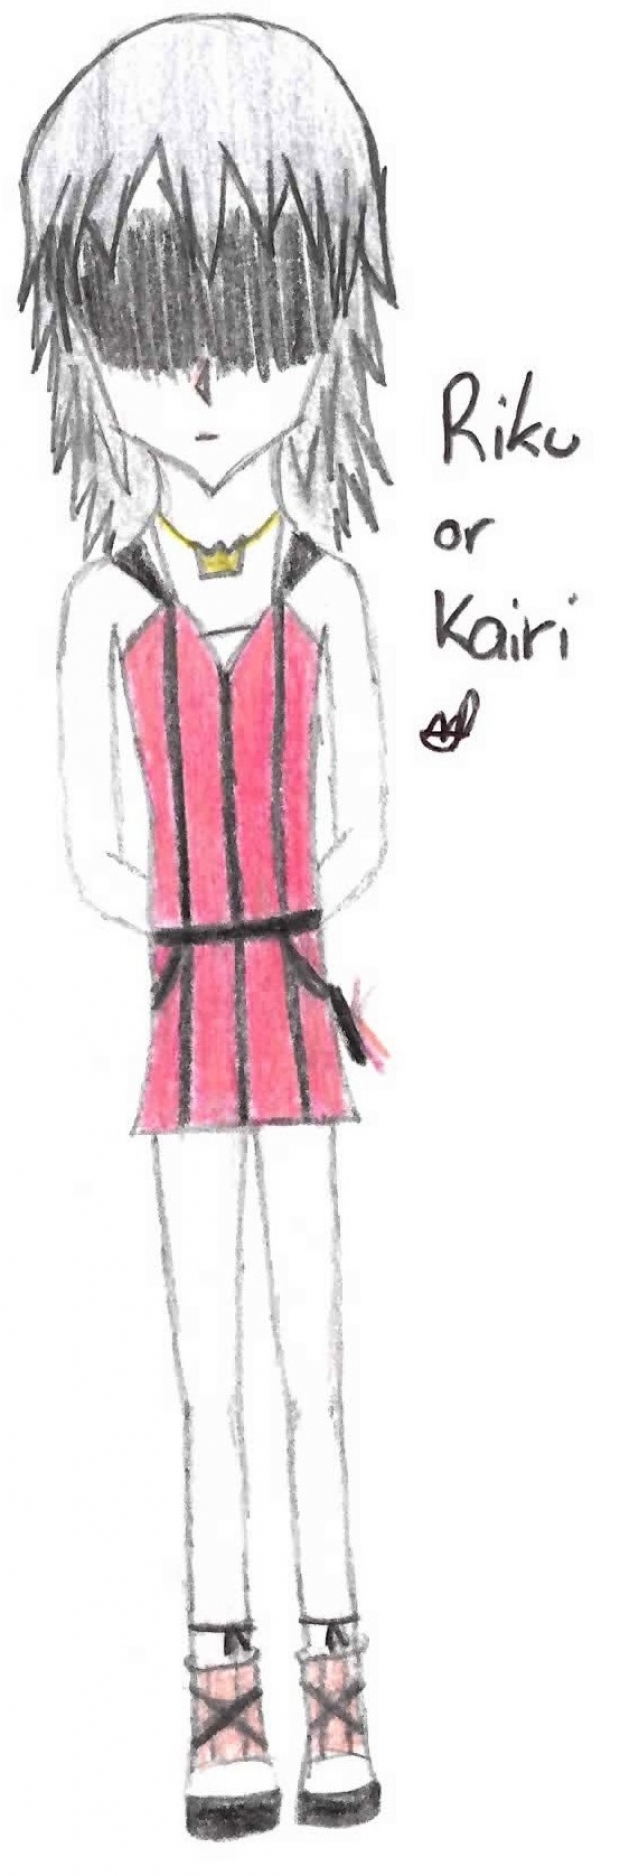 Riku as Kairi